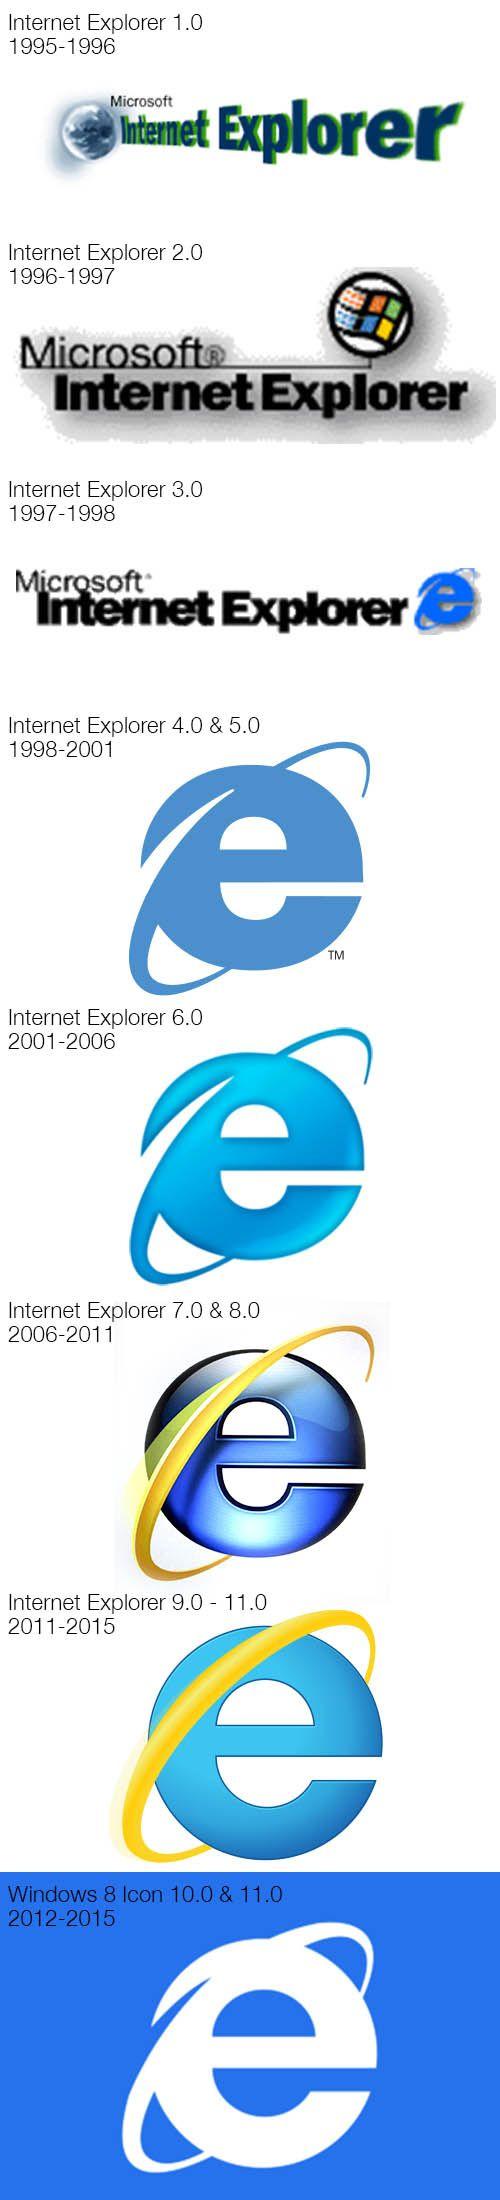 Microsoft Explorer Logo - Internet Explorer Logo Timeline | Kai's personal board